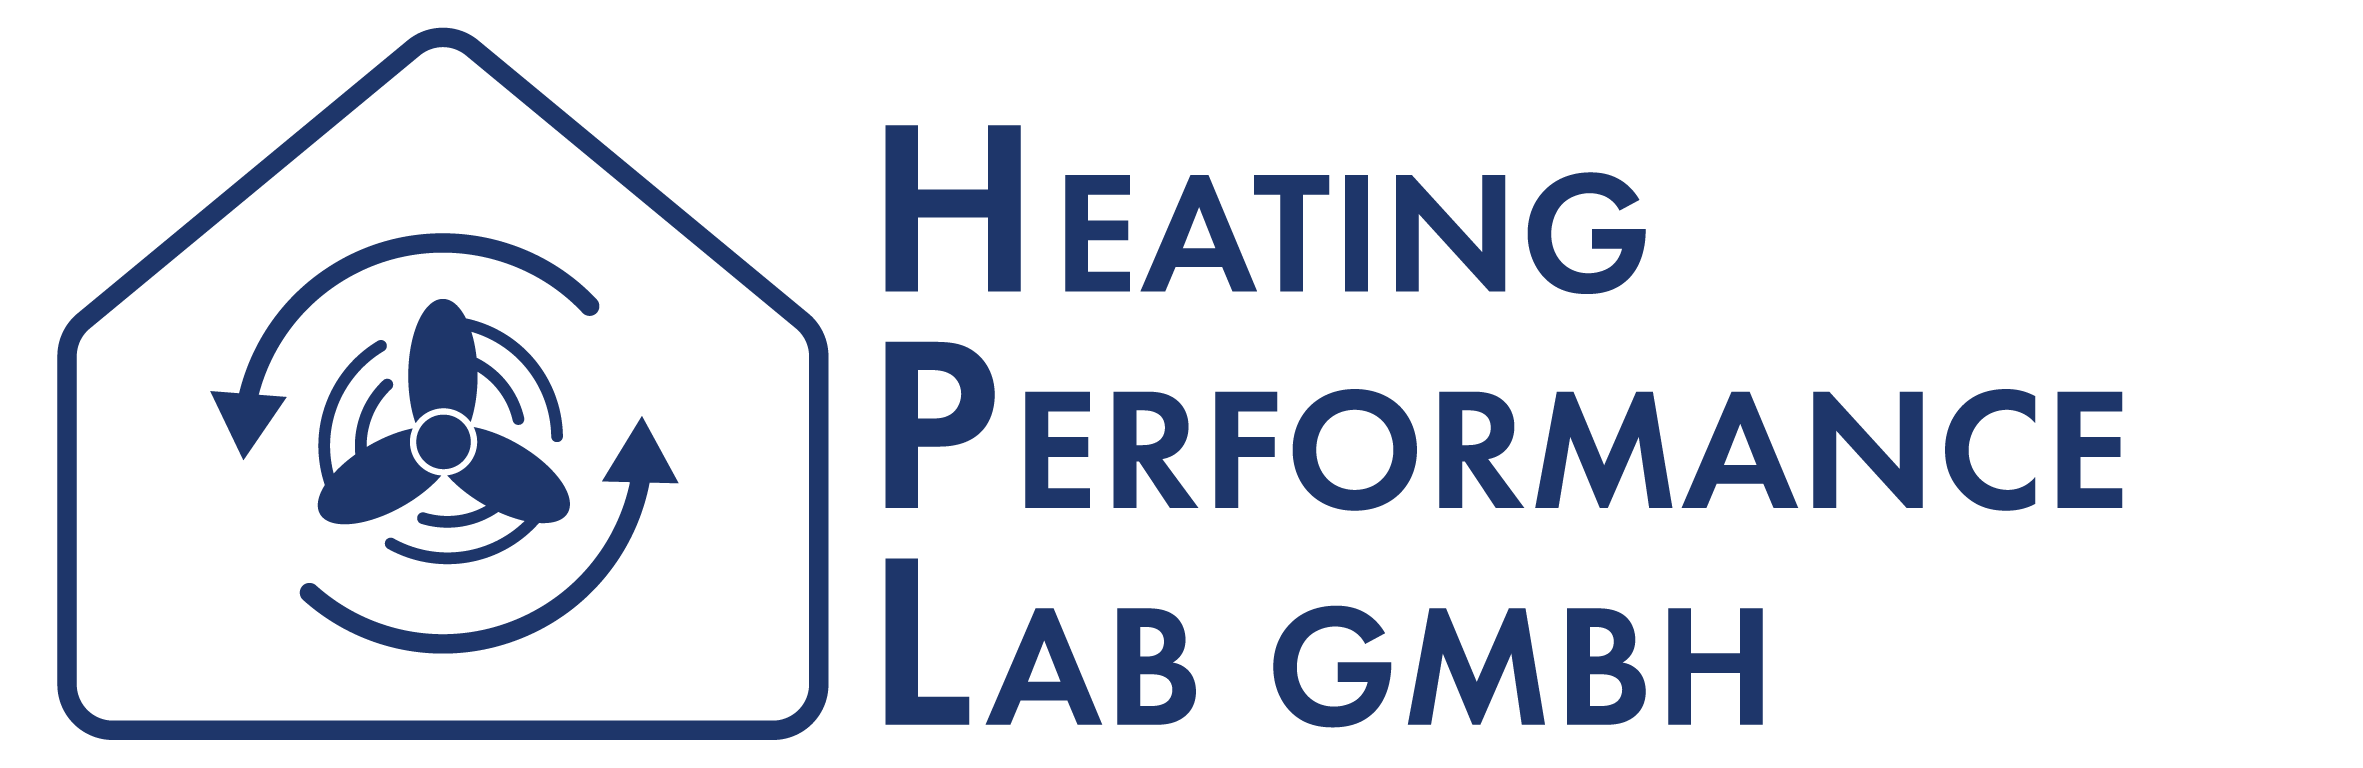 Heating Performance Lab